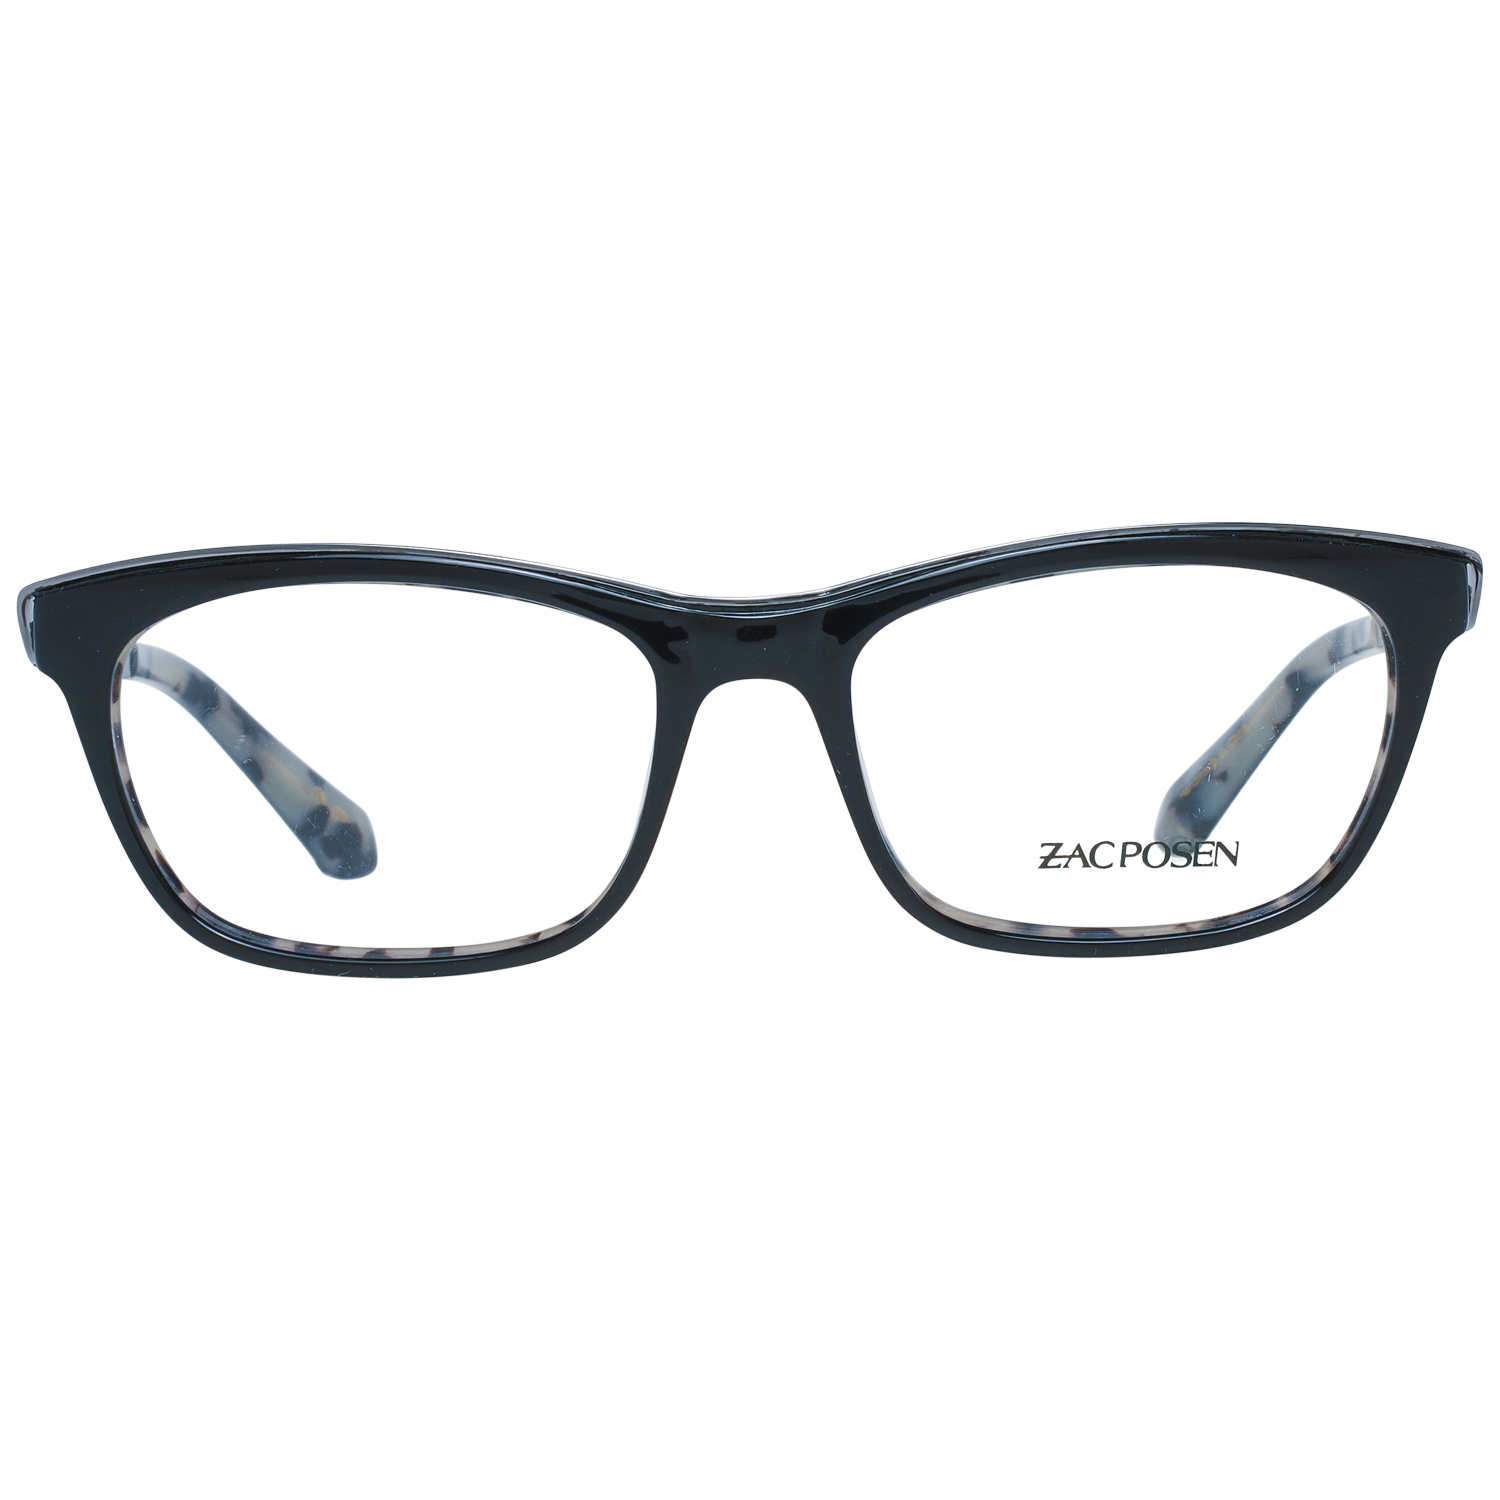 Zac Posen Frames Zac Posen Optical Frame ZIRI SM 53 Irina Eyeglasses Eyewear UK USA Australia 